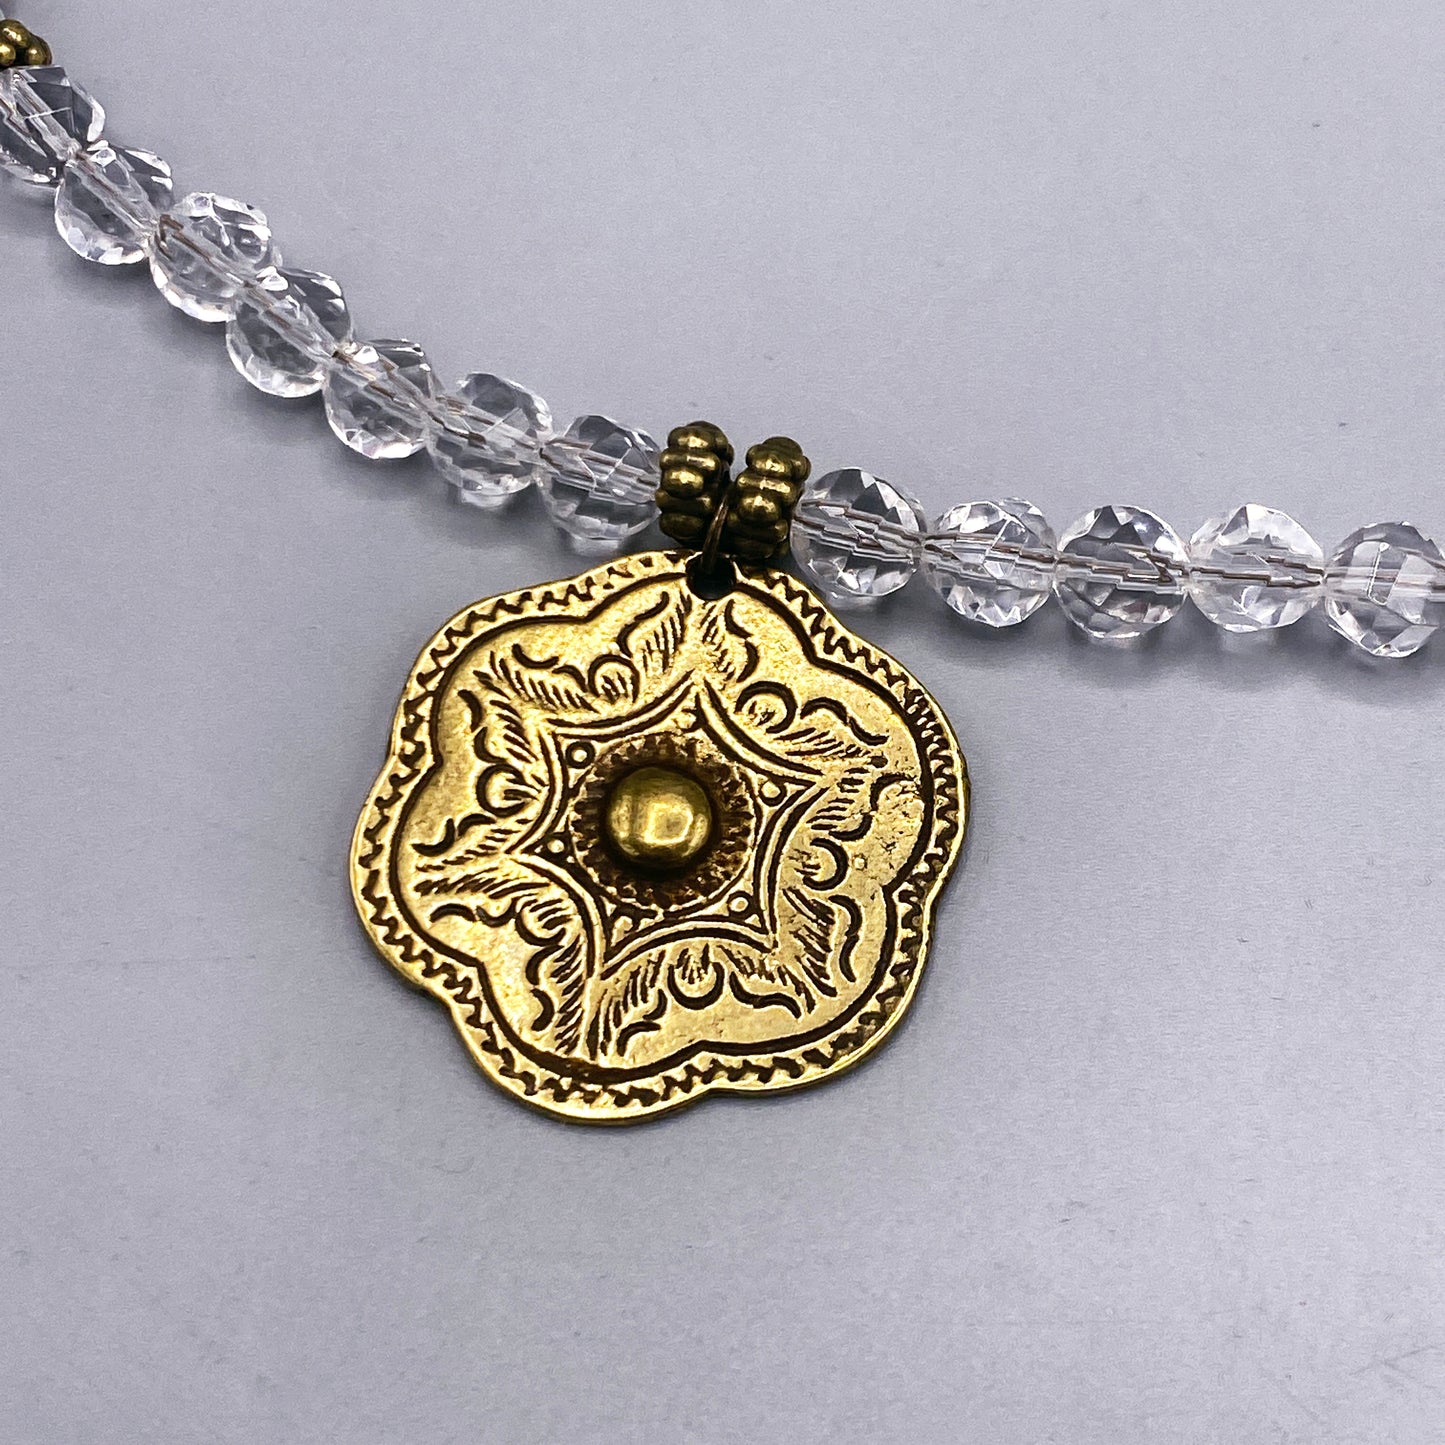 Quartz gemstone and Brass pendant Necklace